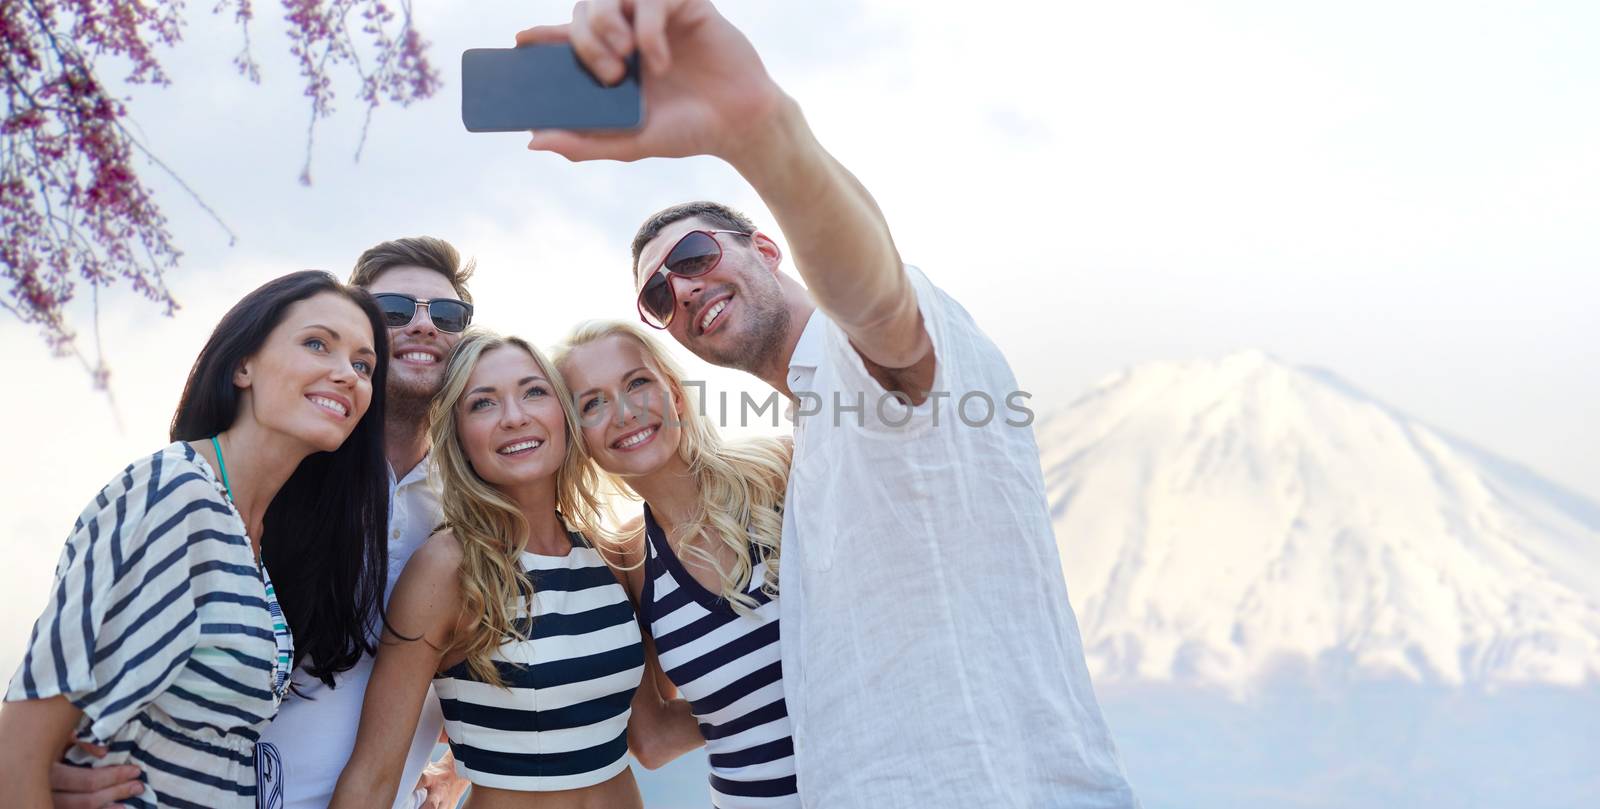 friends taking selfie with smartphone by dolgachov